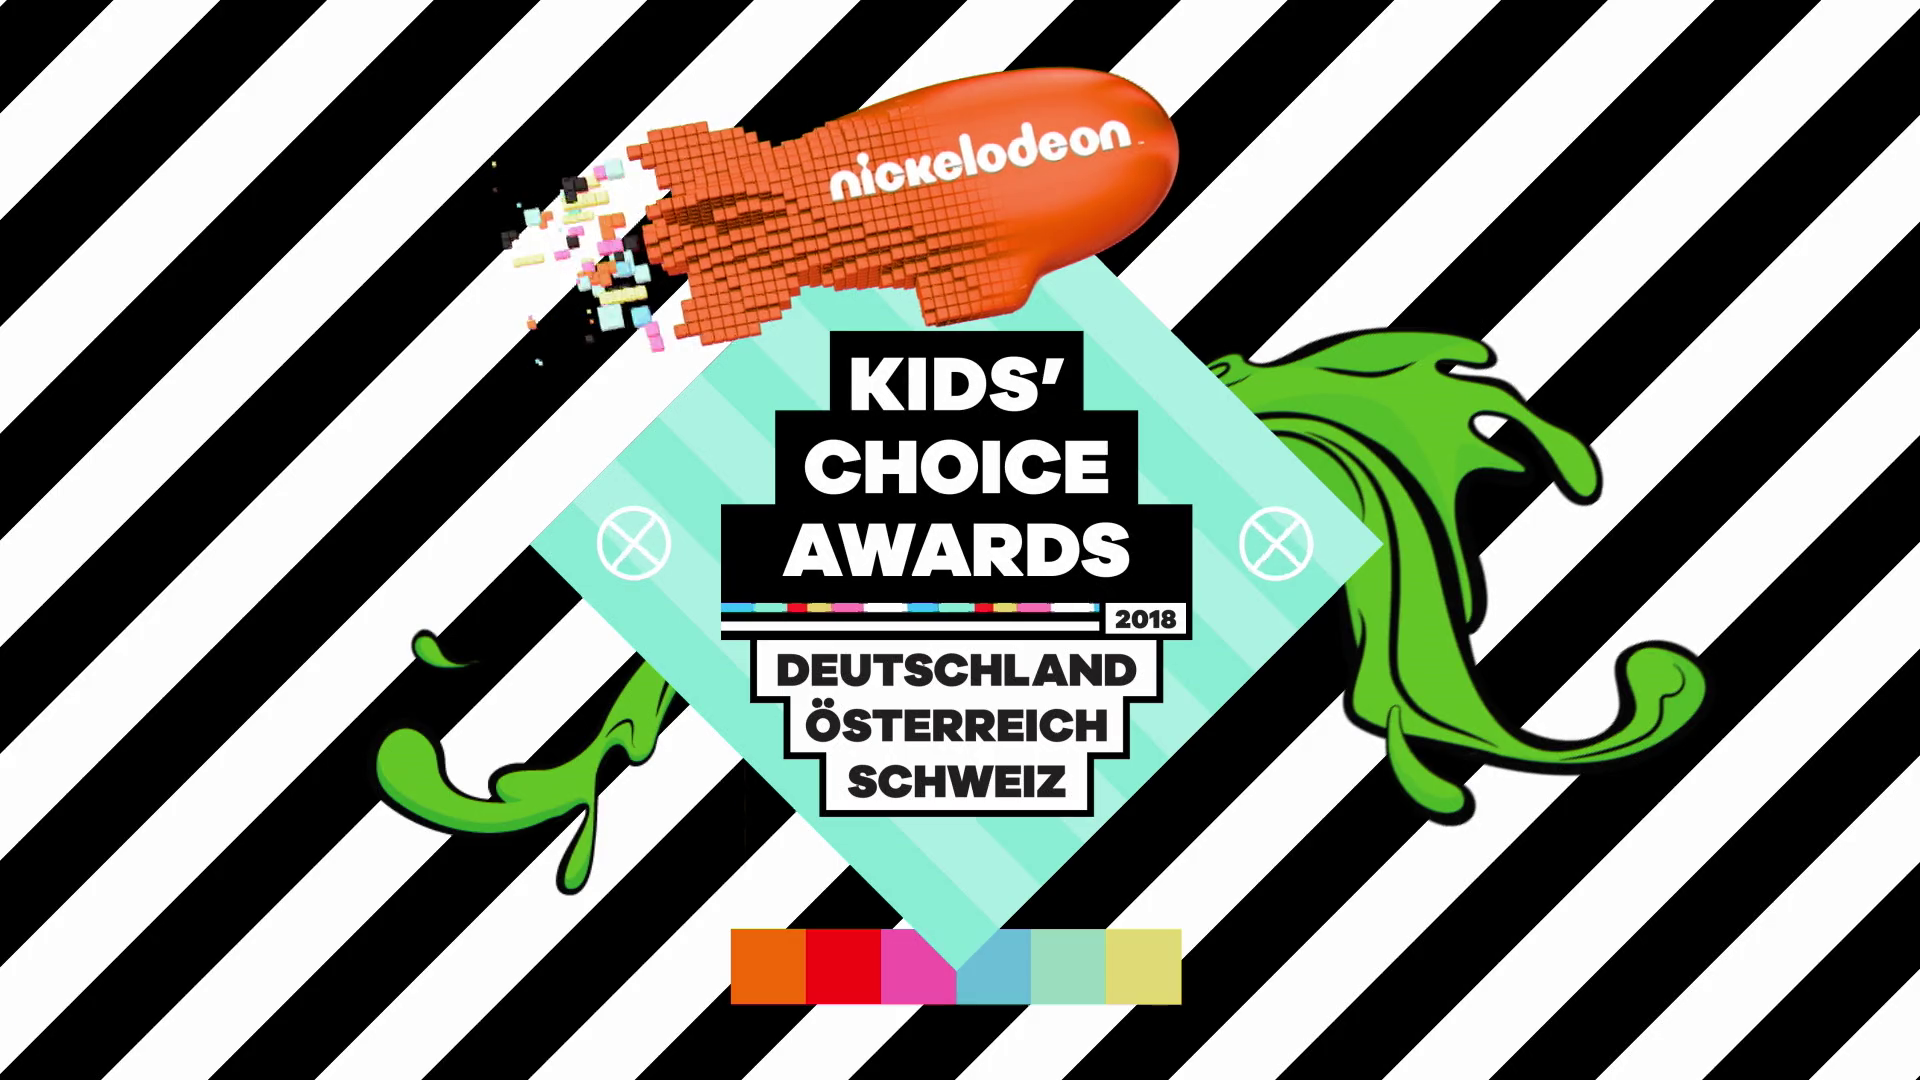 Nickelodeon Kids Choice Awards 2018